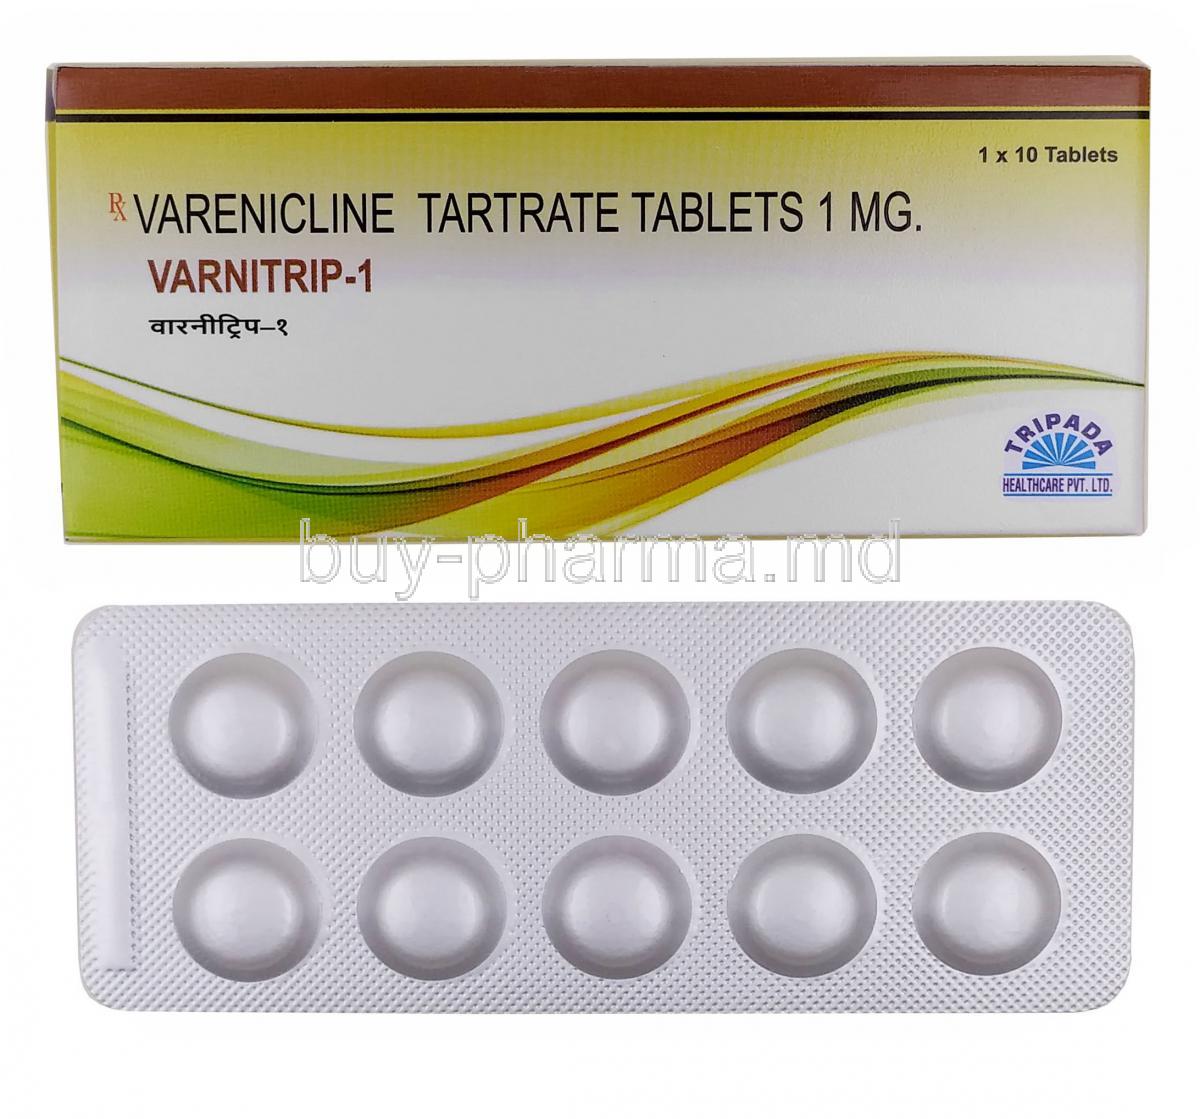 Varnitrip-1, Varenicline 1mg, Tripada Healthcare, Box, Blisterpack